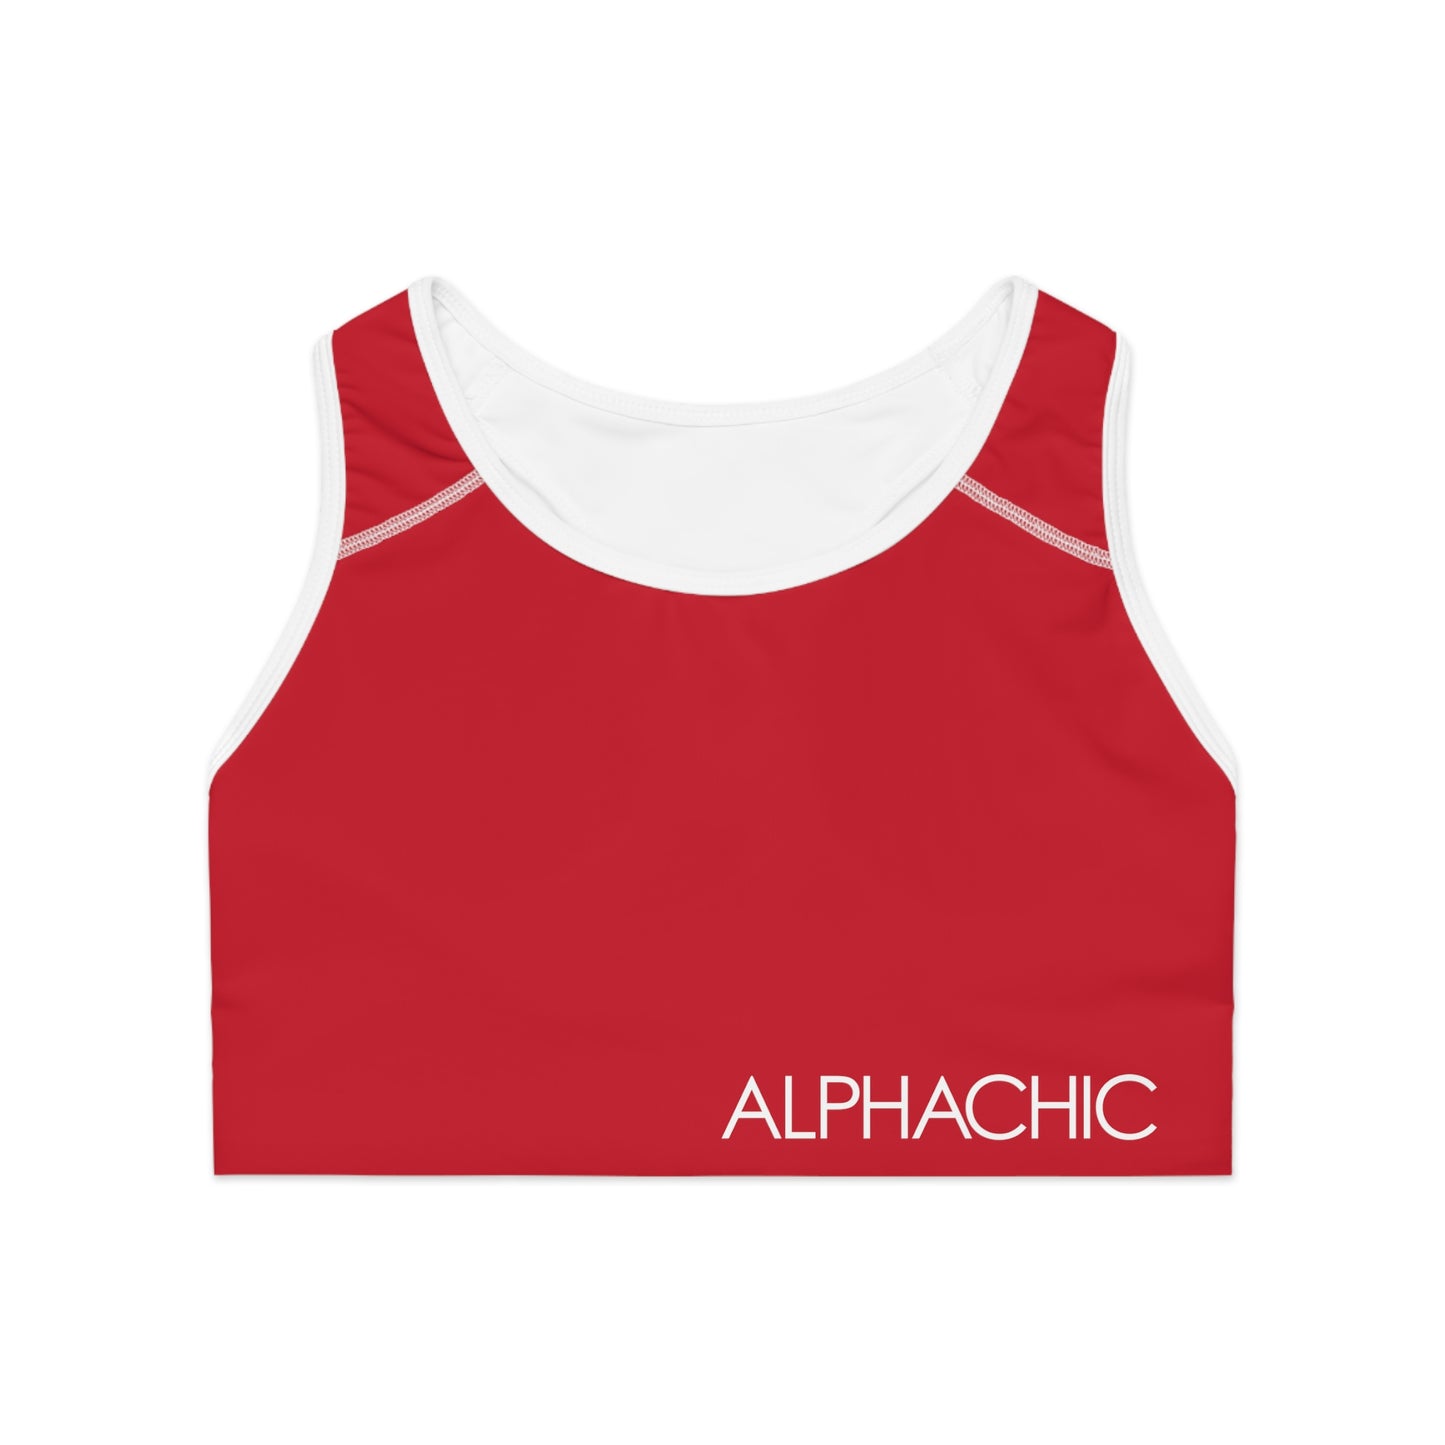 AlphaChic Sports Bra - Red